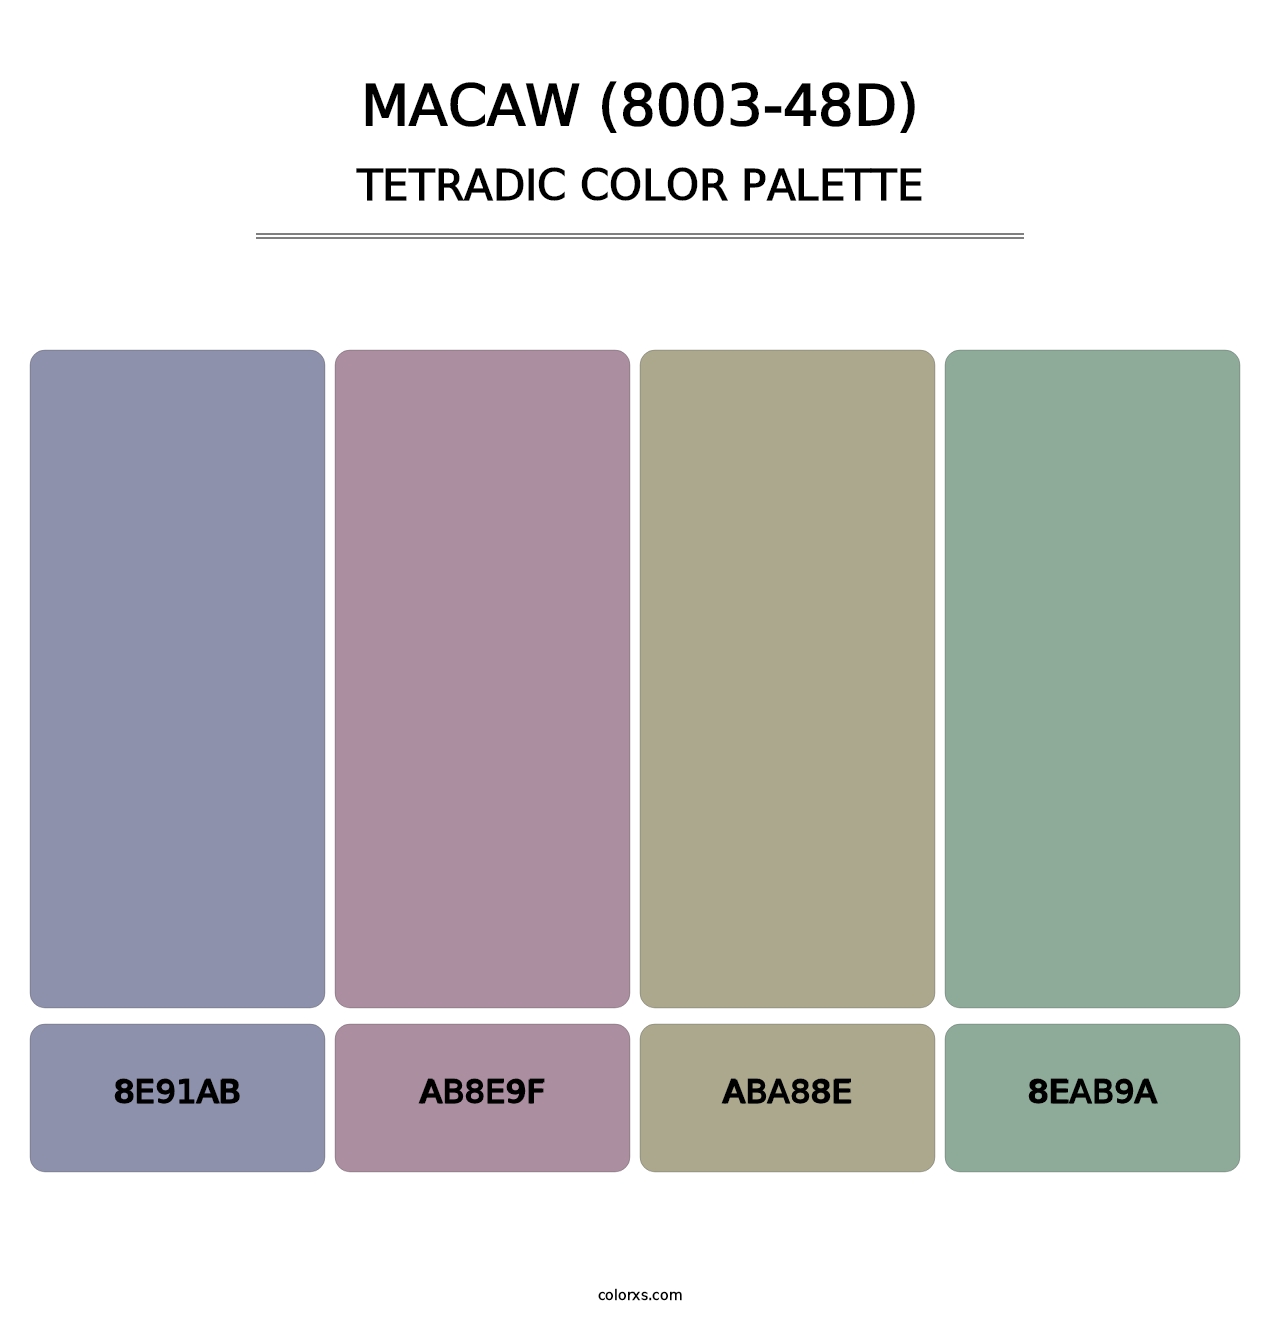 Macaw (8003-48D) - Tetradic Color Palette